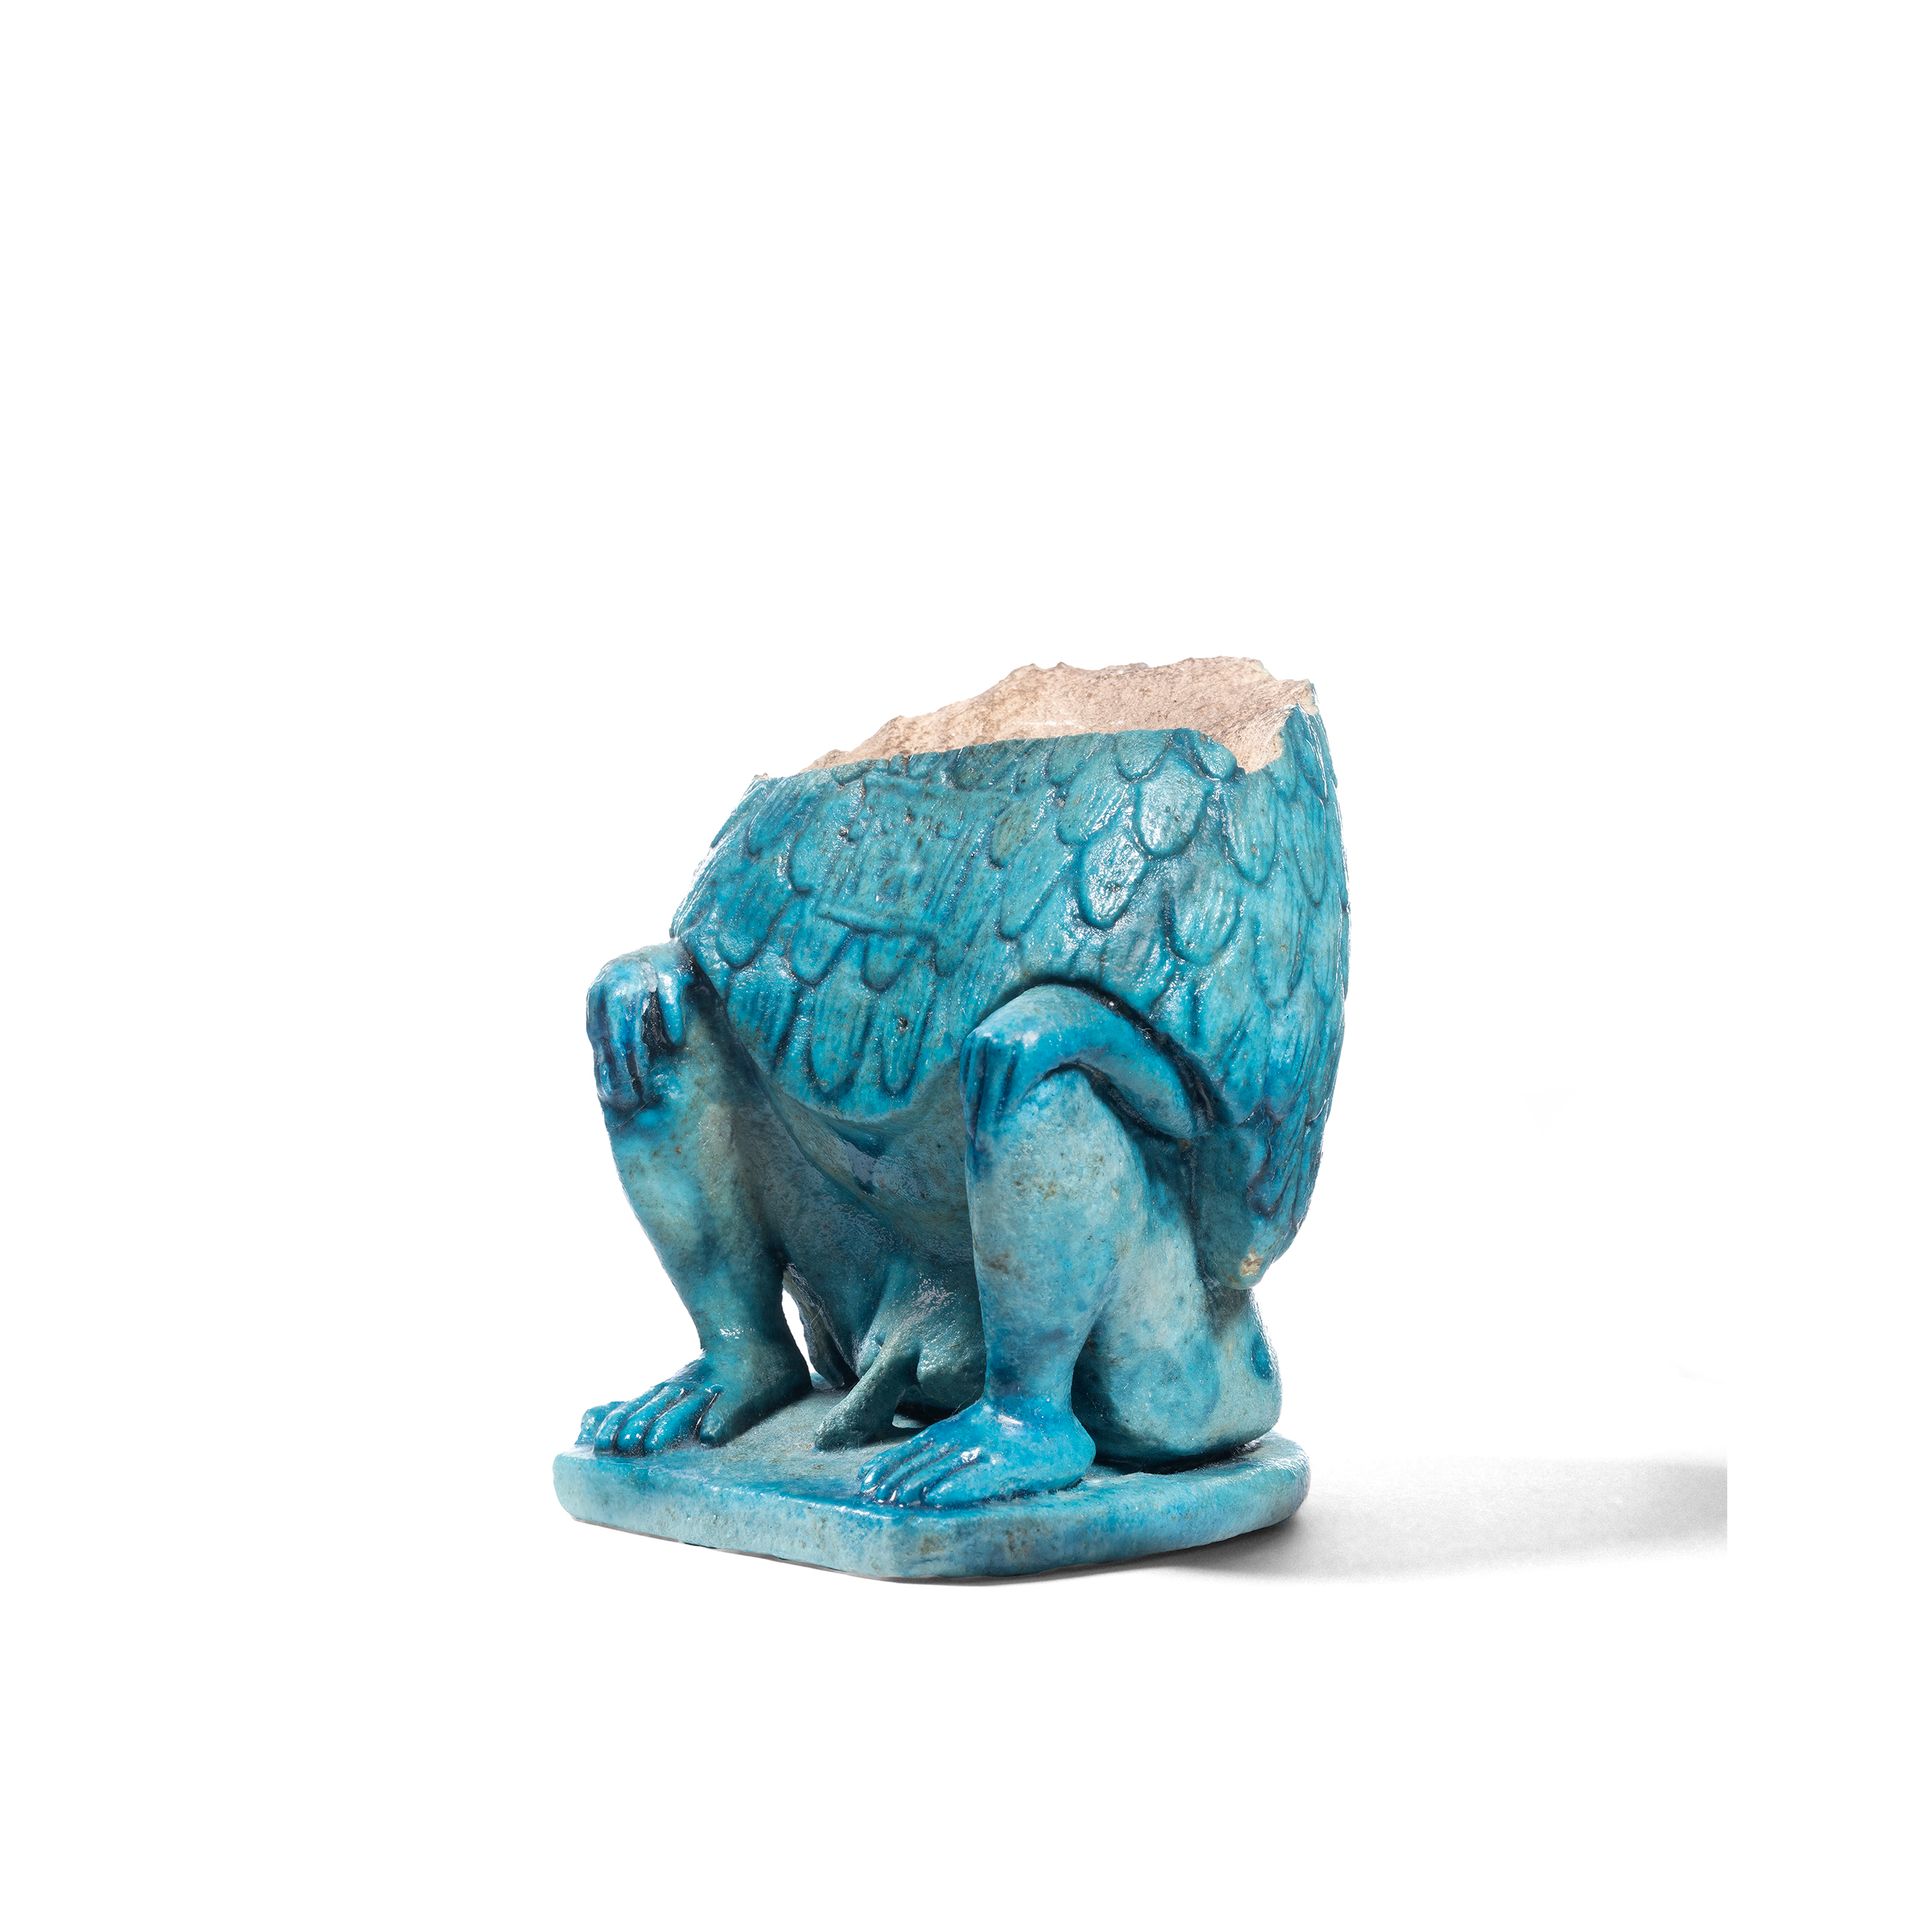 Null 狒狒雕像
硅质陶器，蓝釉。
壶身上部缺失；背面的陶器有缺口。
对釉面进行修复。
高8,0厘米
埃及，新王国，第十九王朝，约公元前1300年 

出处 &hellip;